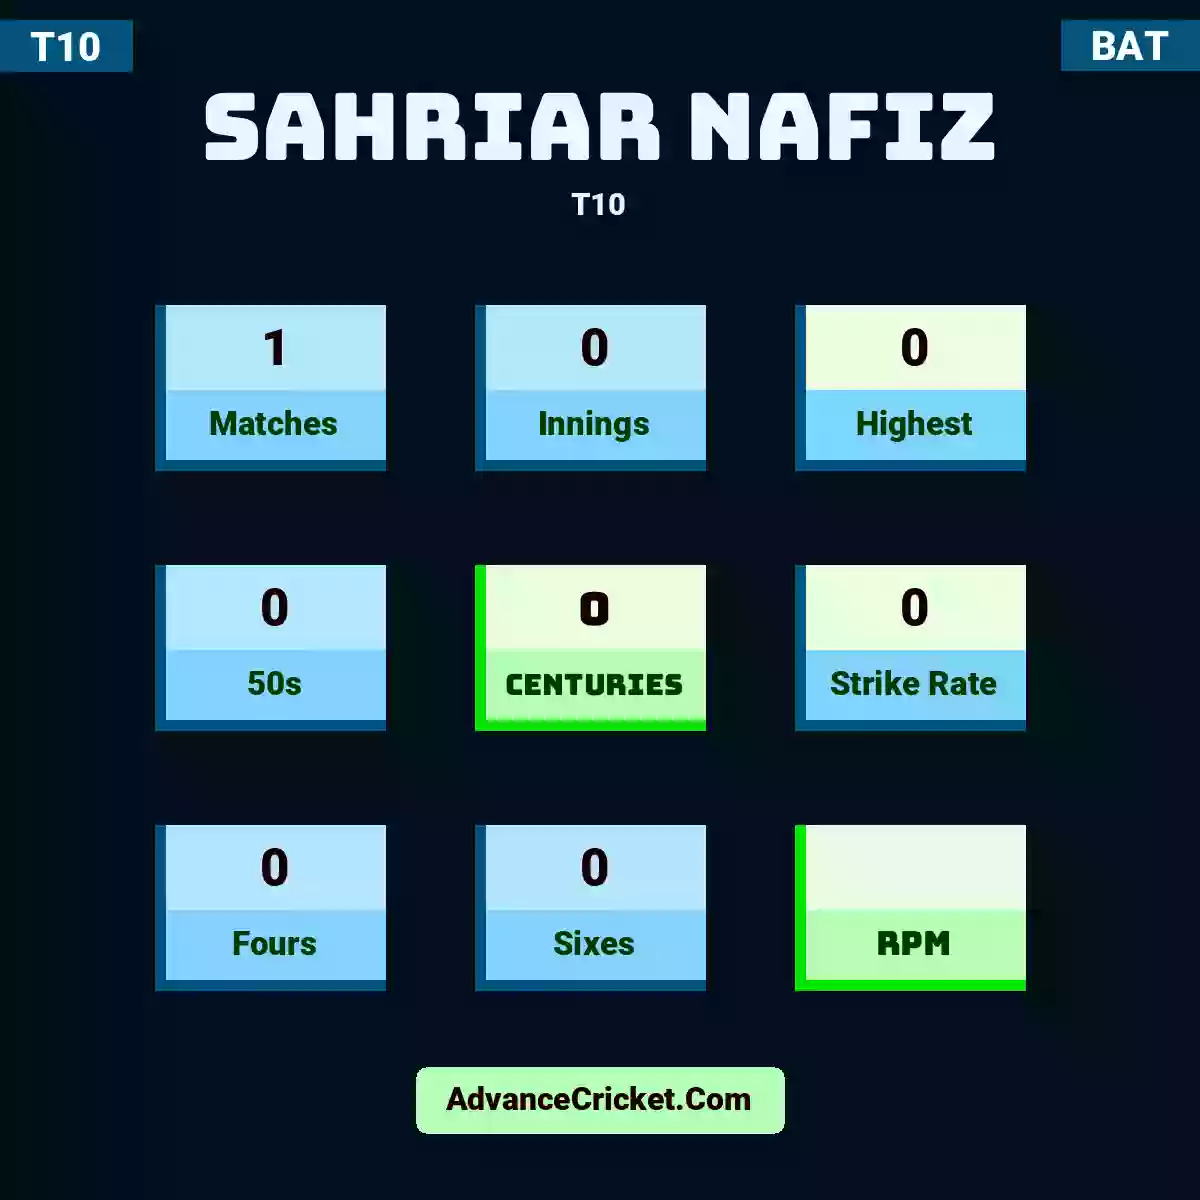 Sahriar Nafiz T10 , Sahriar Nafiz played 1 matches, scored 0 runs as highest, 0 half-centuries, and 0 centuries, with a strike rate of 0. S.Nafiz hit 0 fours and 0 sixes.